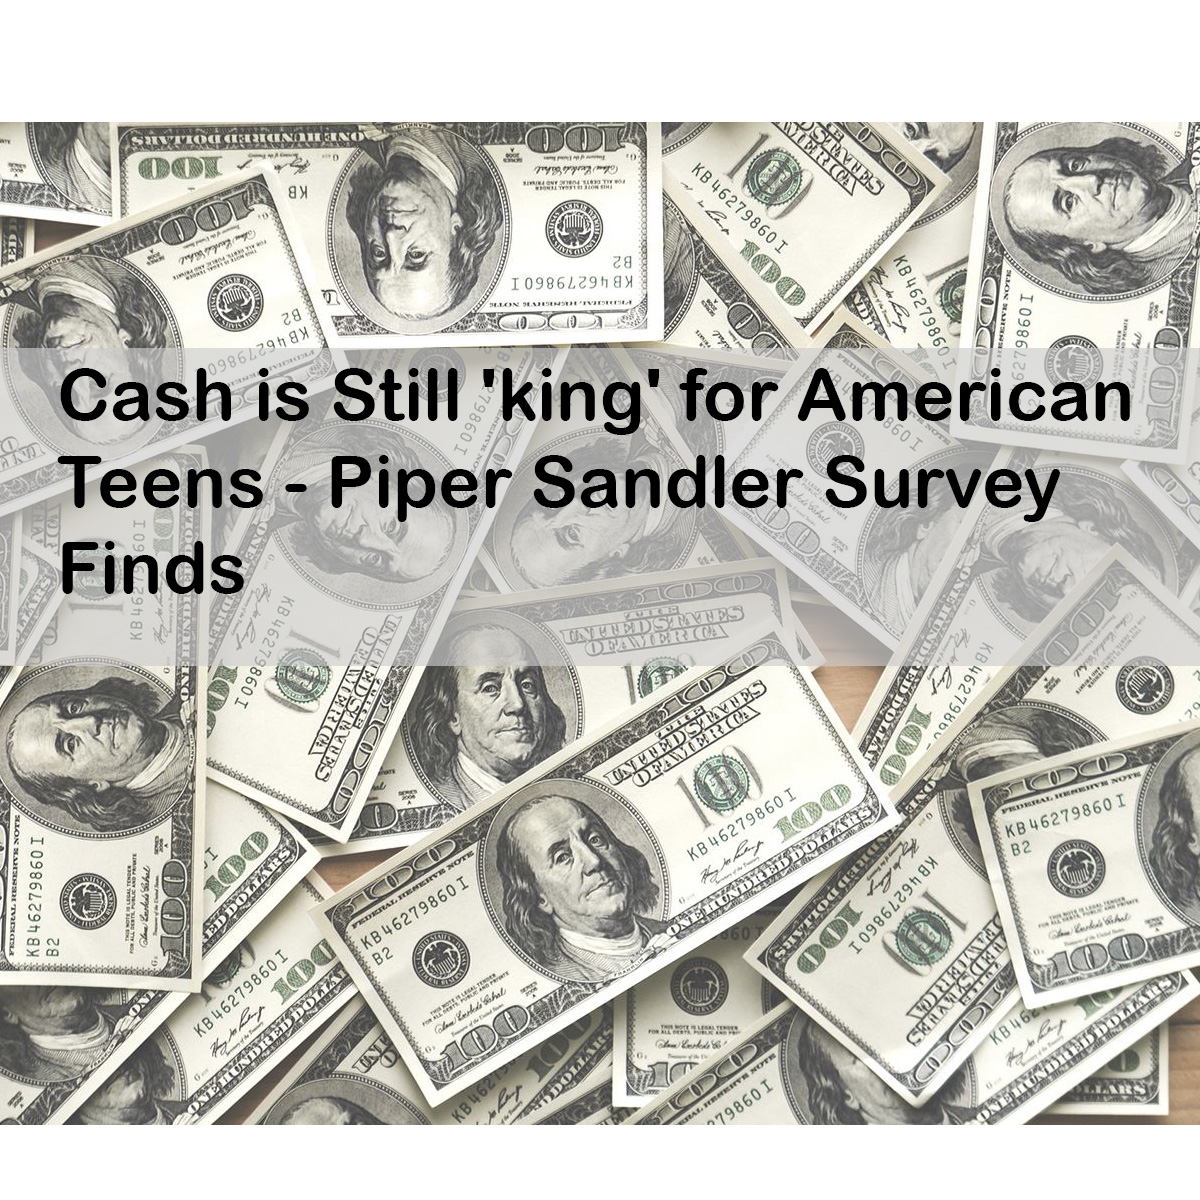 Cash is Still 'king' for American Teens - Piper Sandler Survey Finds